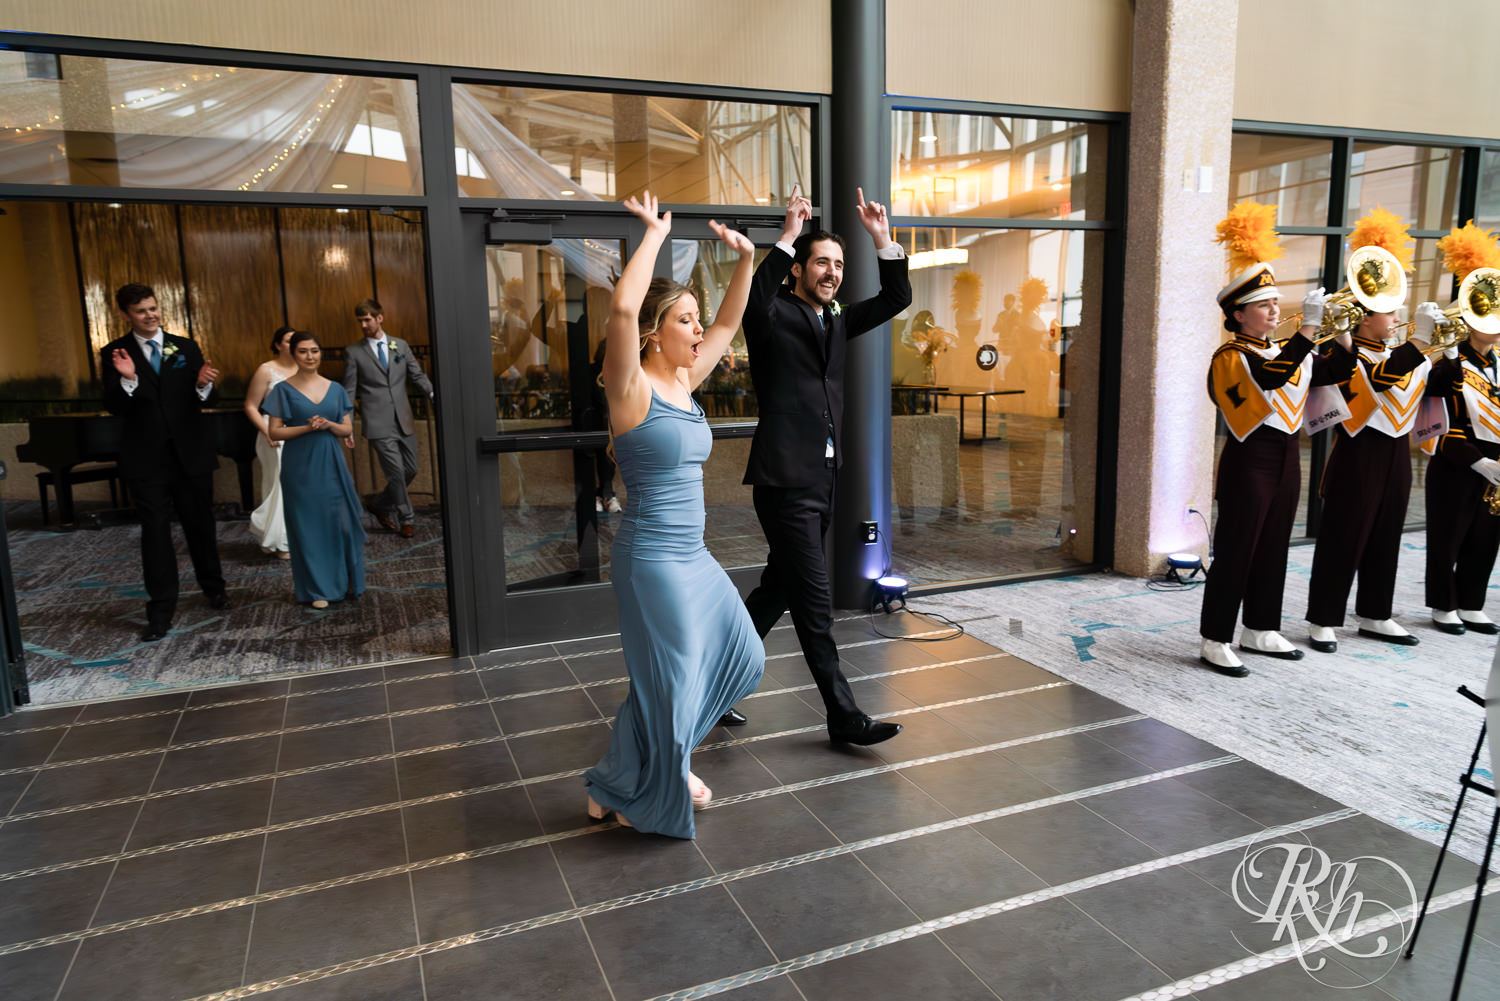 Wedding party enters wedding reception at Doubletree Hilton Saint Paul in Saint Paul, Minnesota.